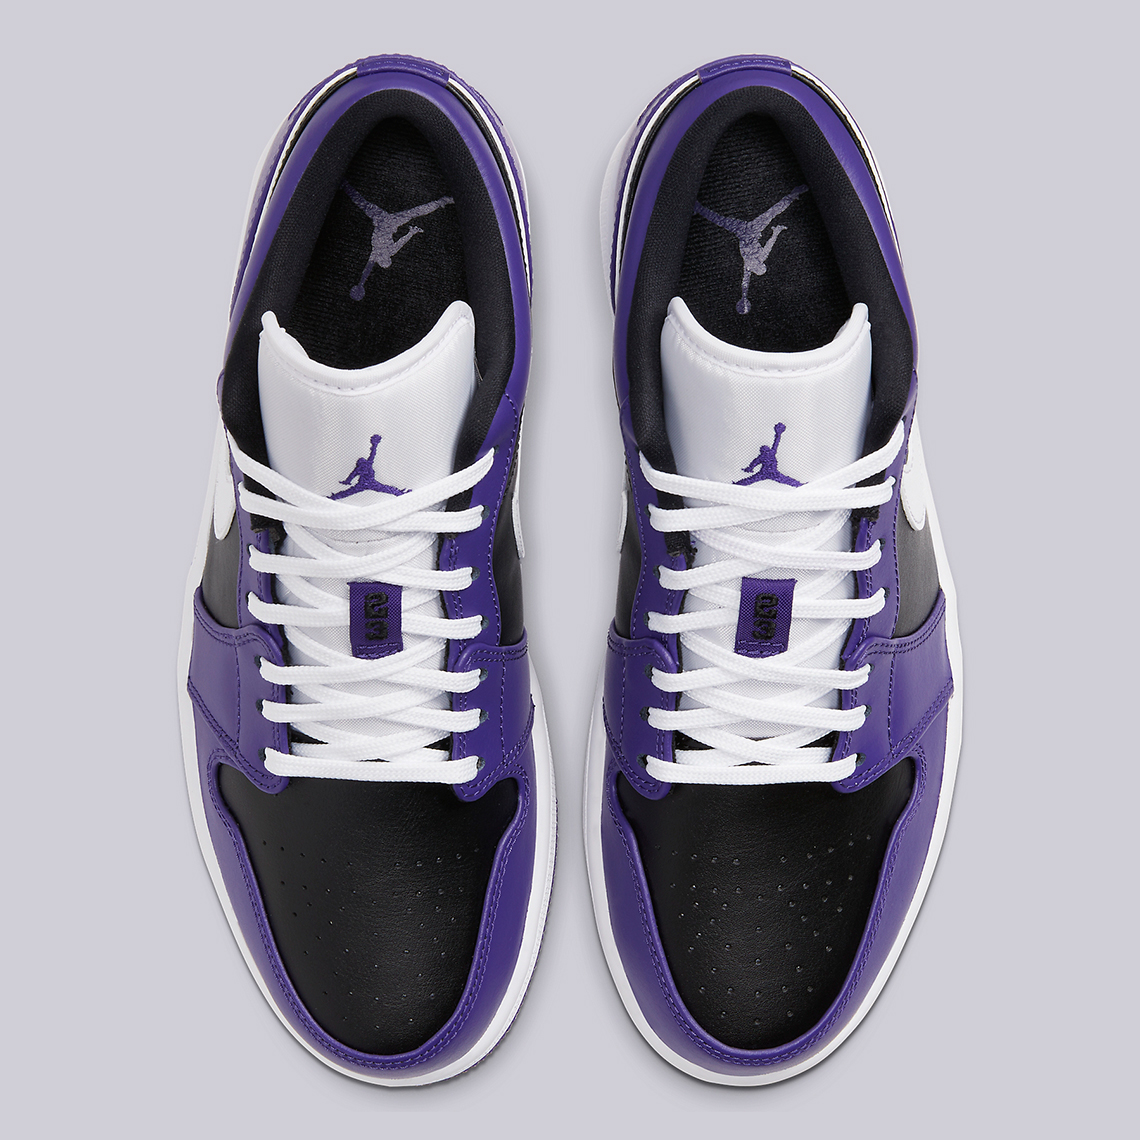 Air Jordan 1 Low Purple Black - Release Info | SneakerNews.com